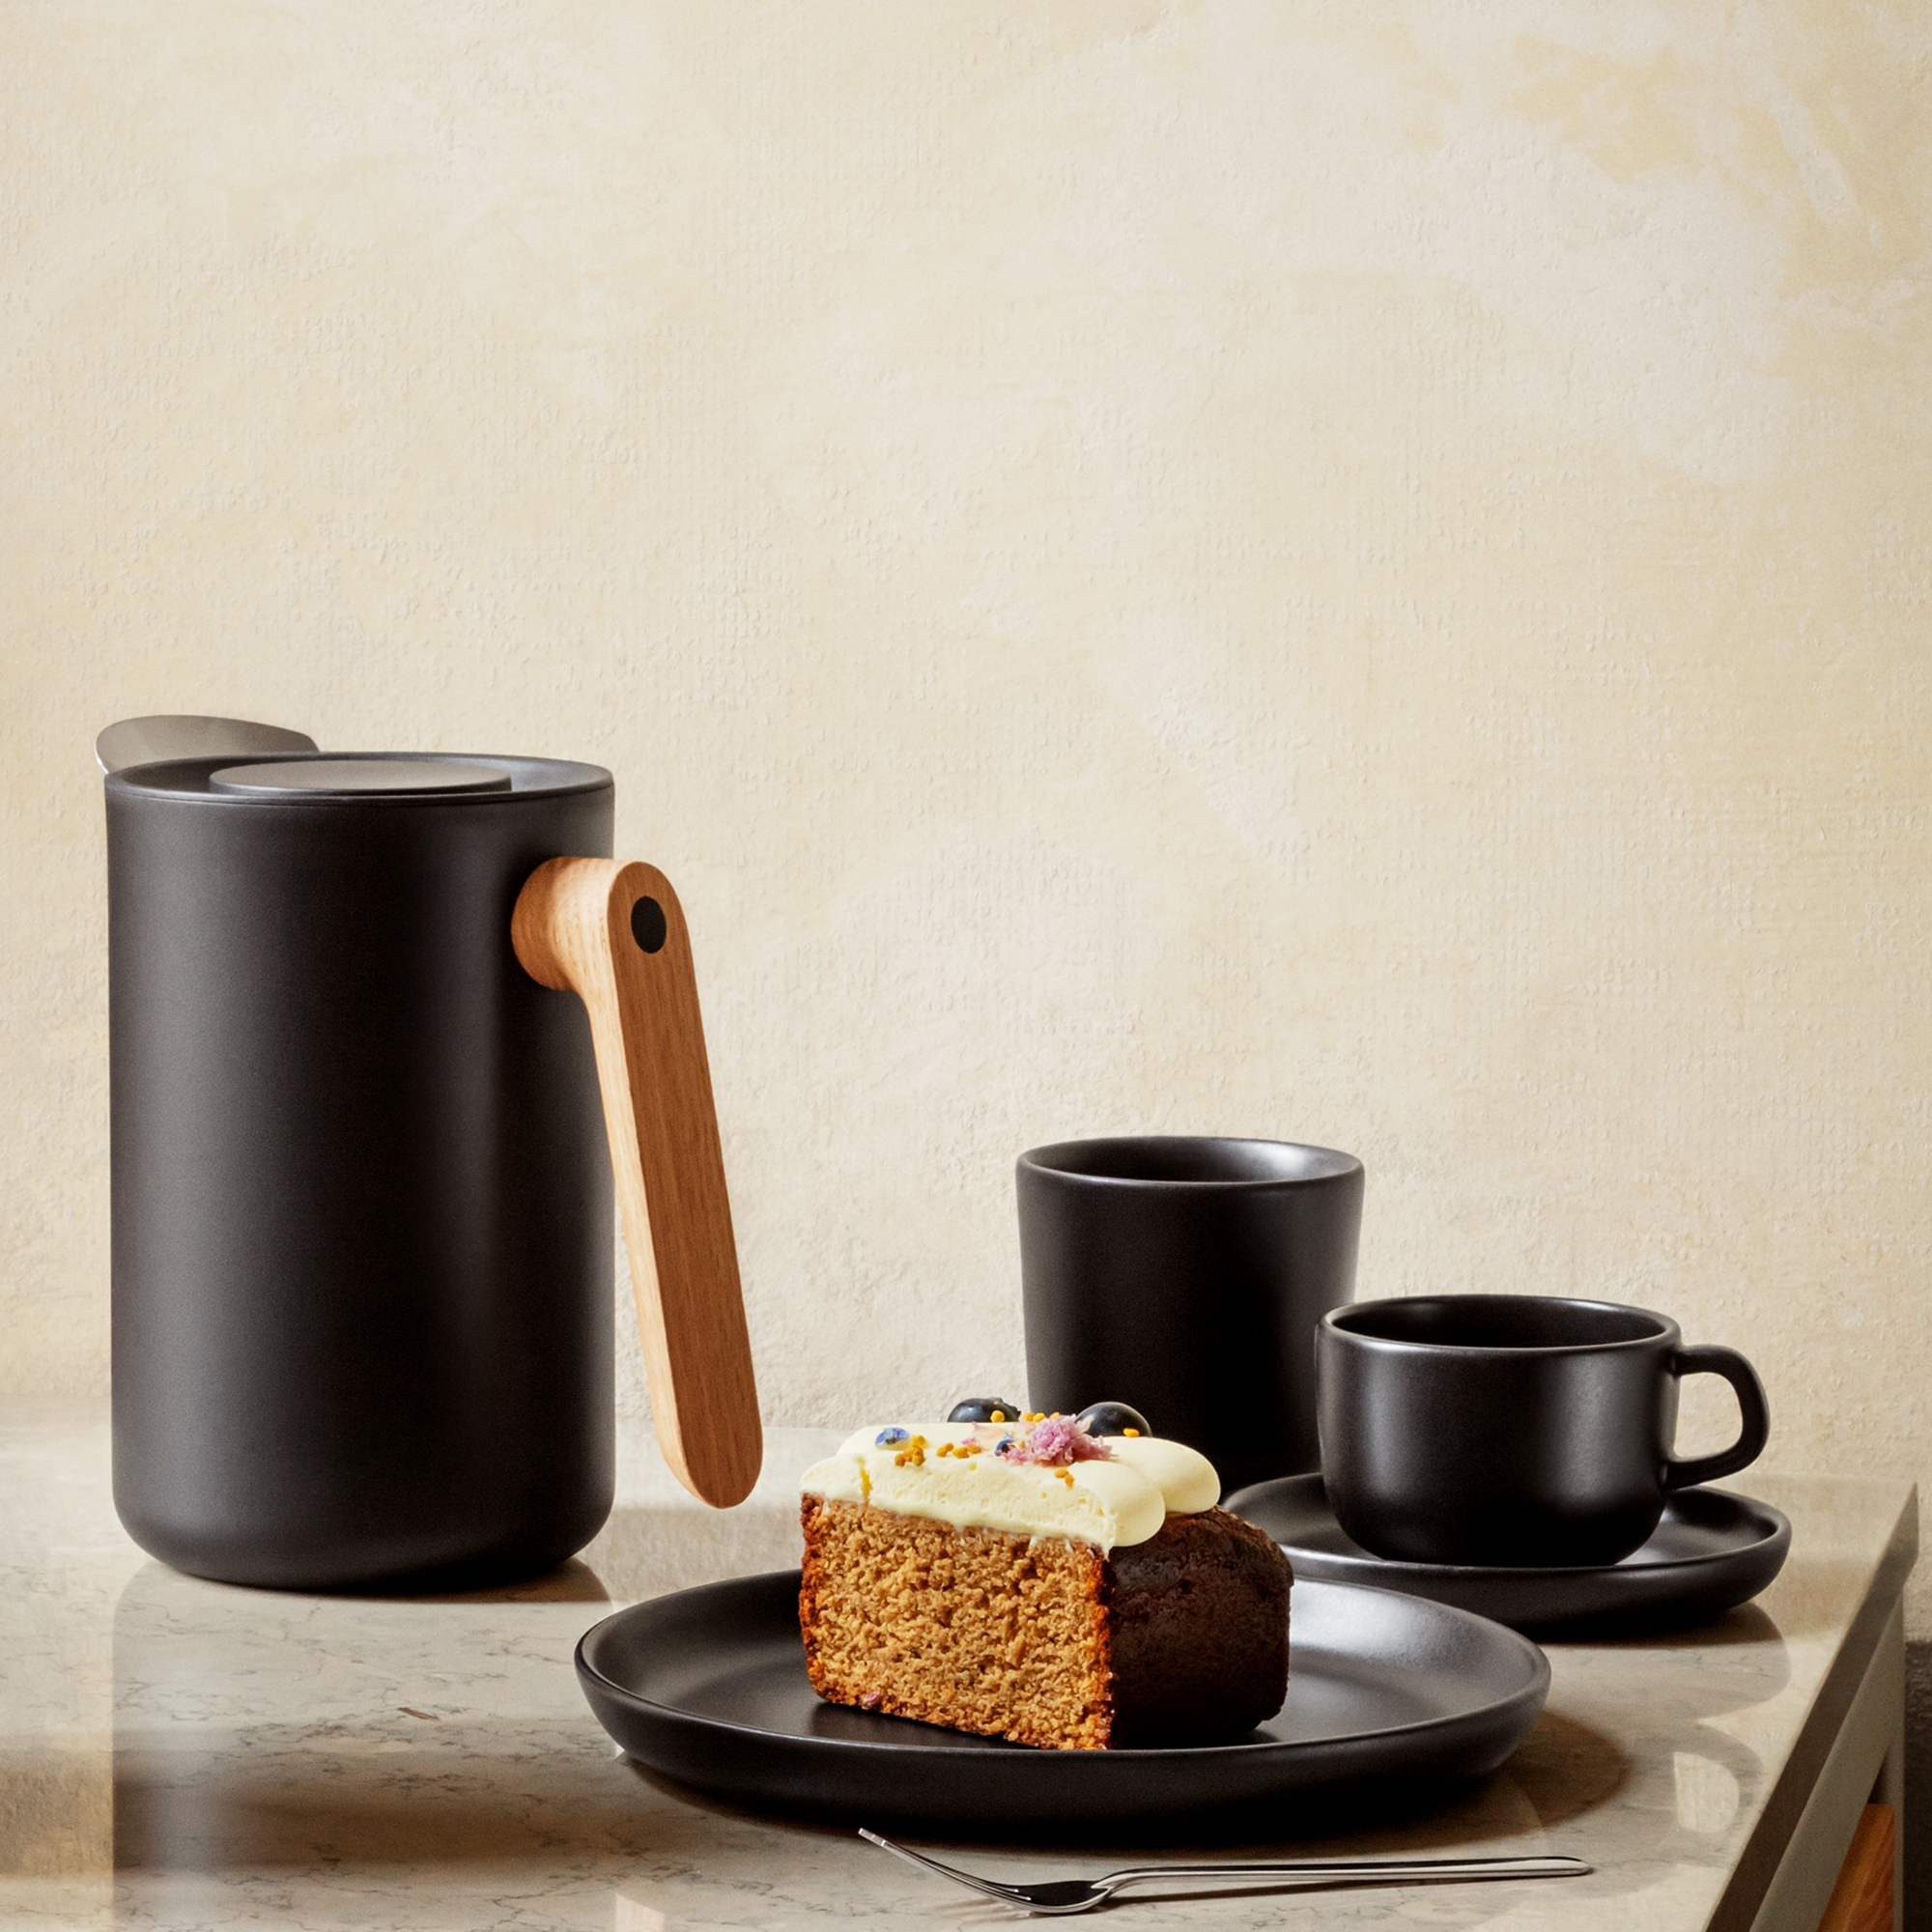 Eva Solo - Thermo mug - Nordic kitchen